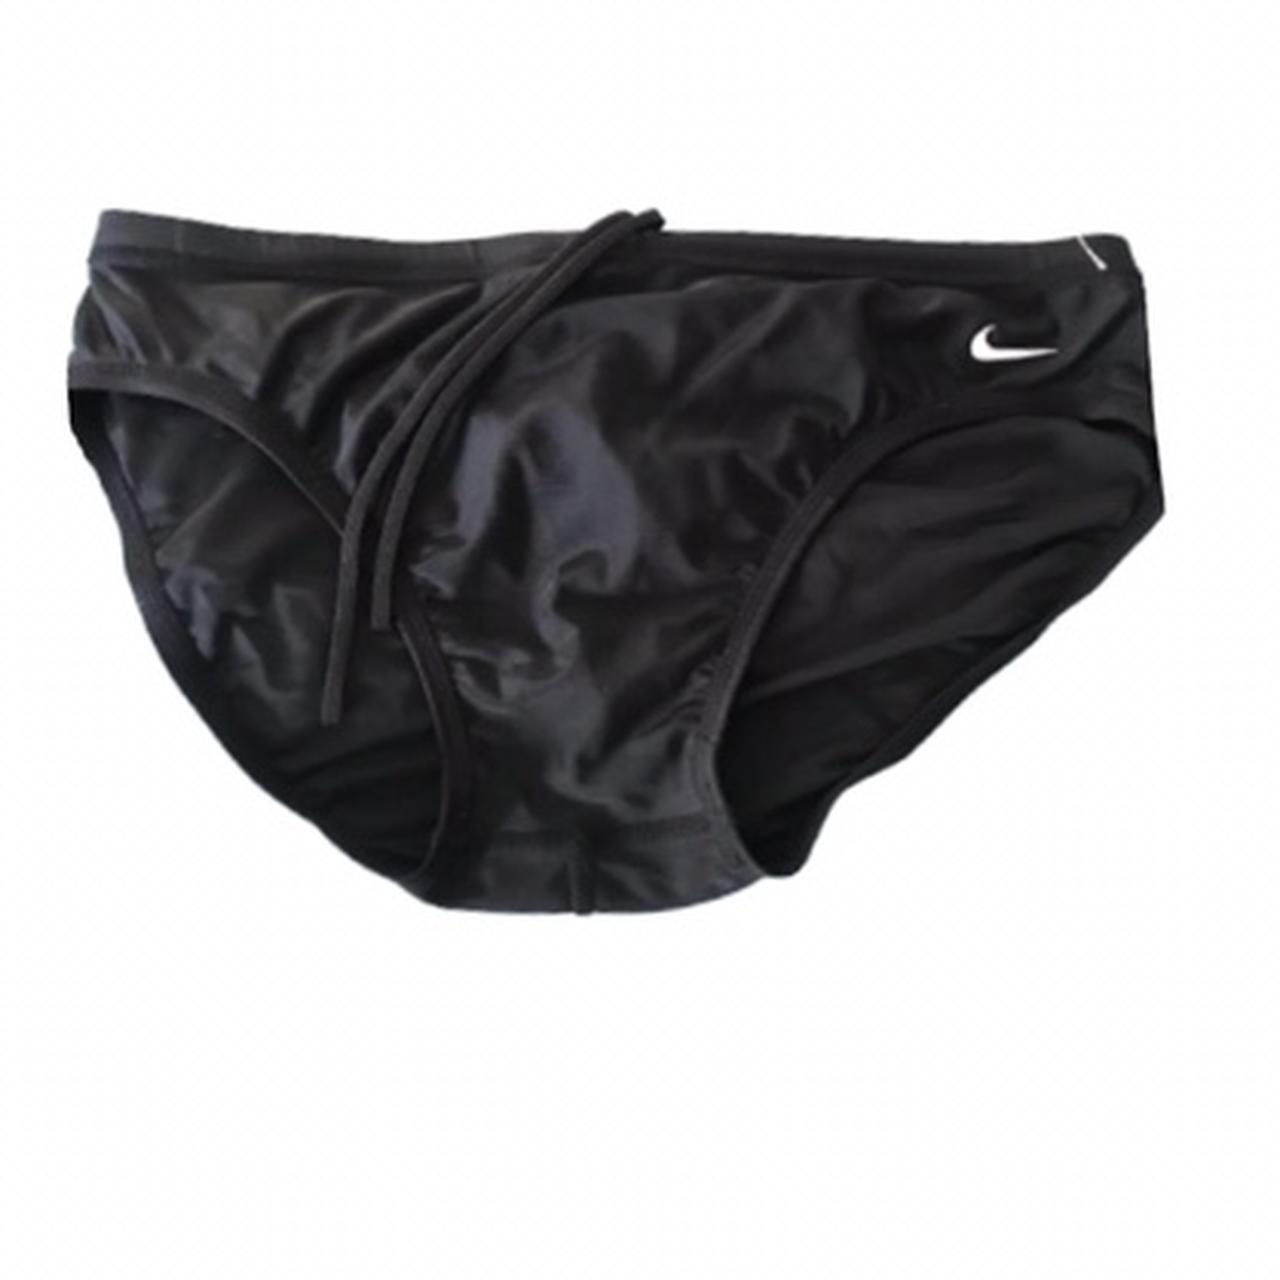 Nike Men's Black Swim-briefs-shorts